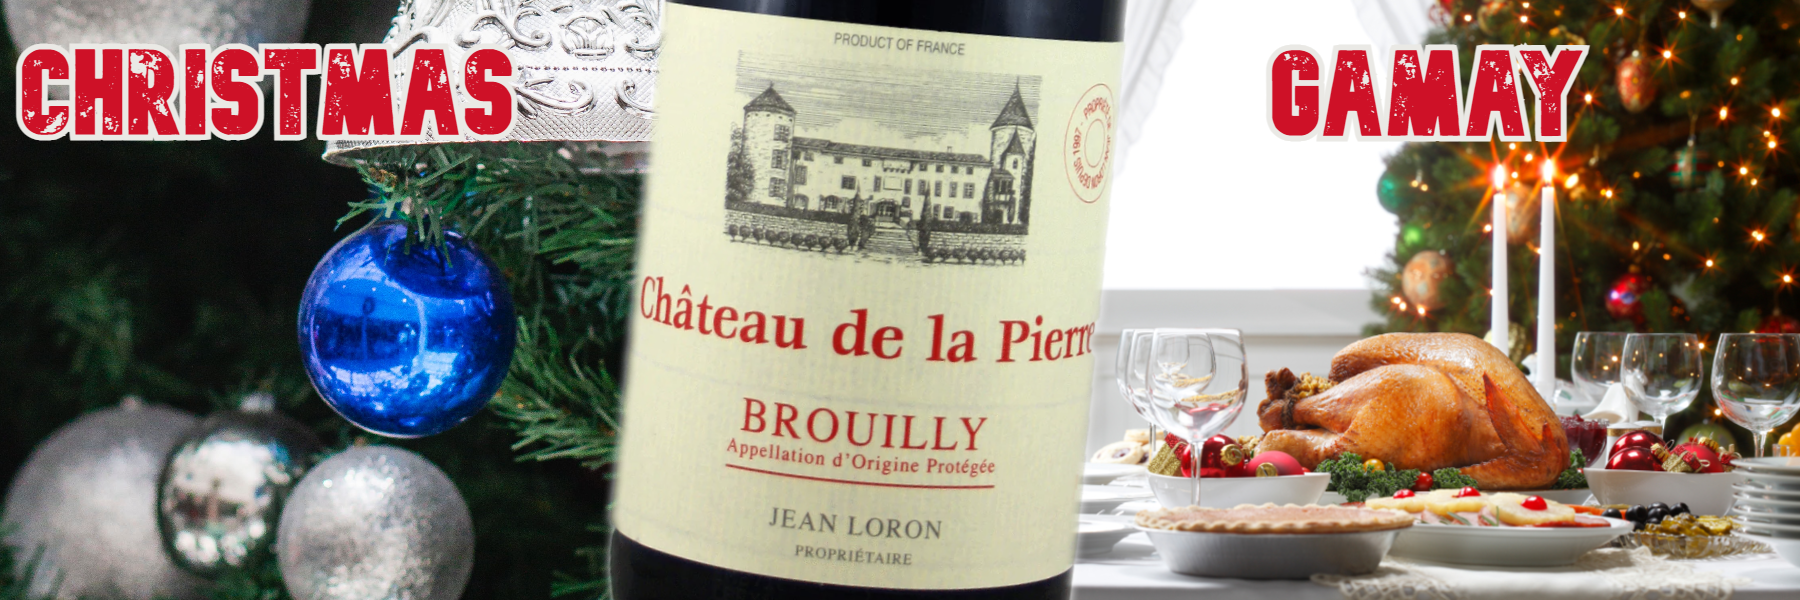 Buy Christmas Gamay - Chateau de la Pierre Brouilly, Jean Loron, 2018 for £14/bottle